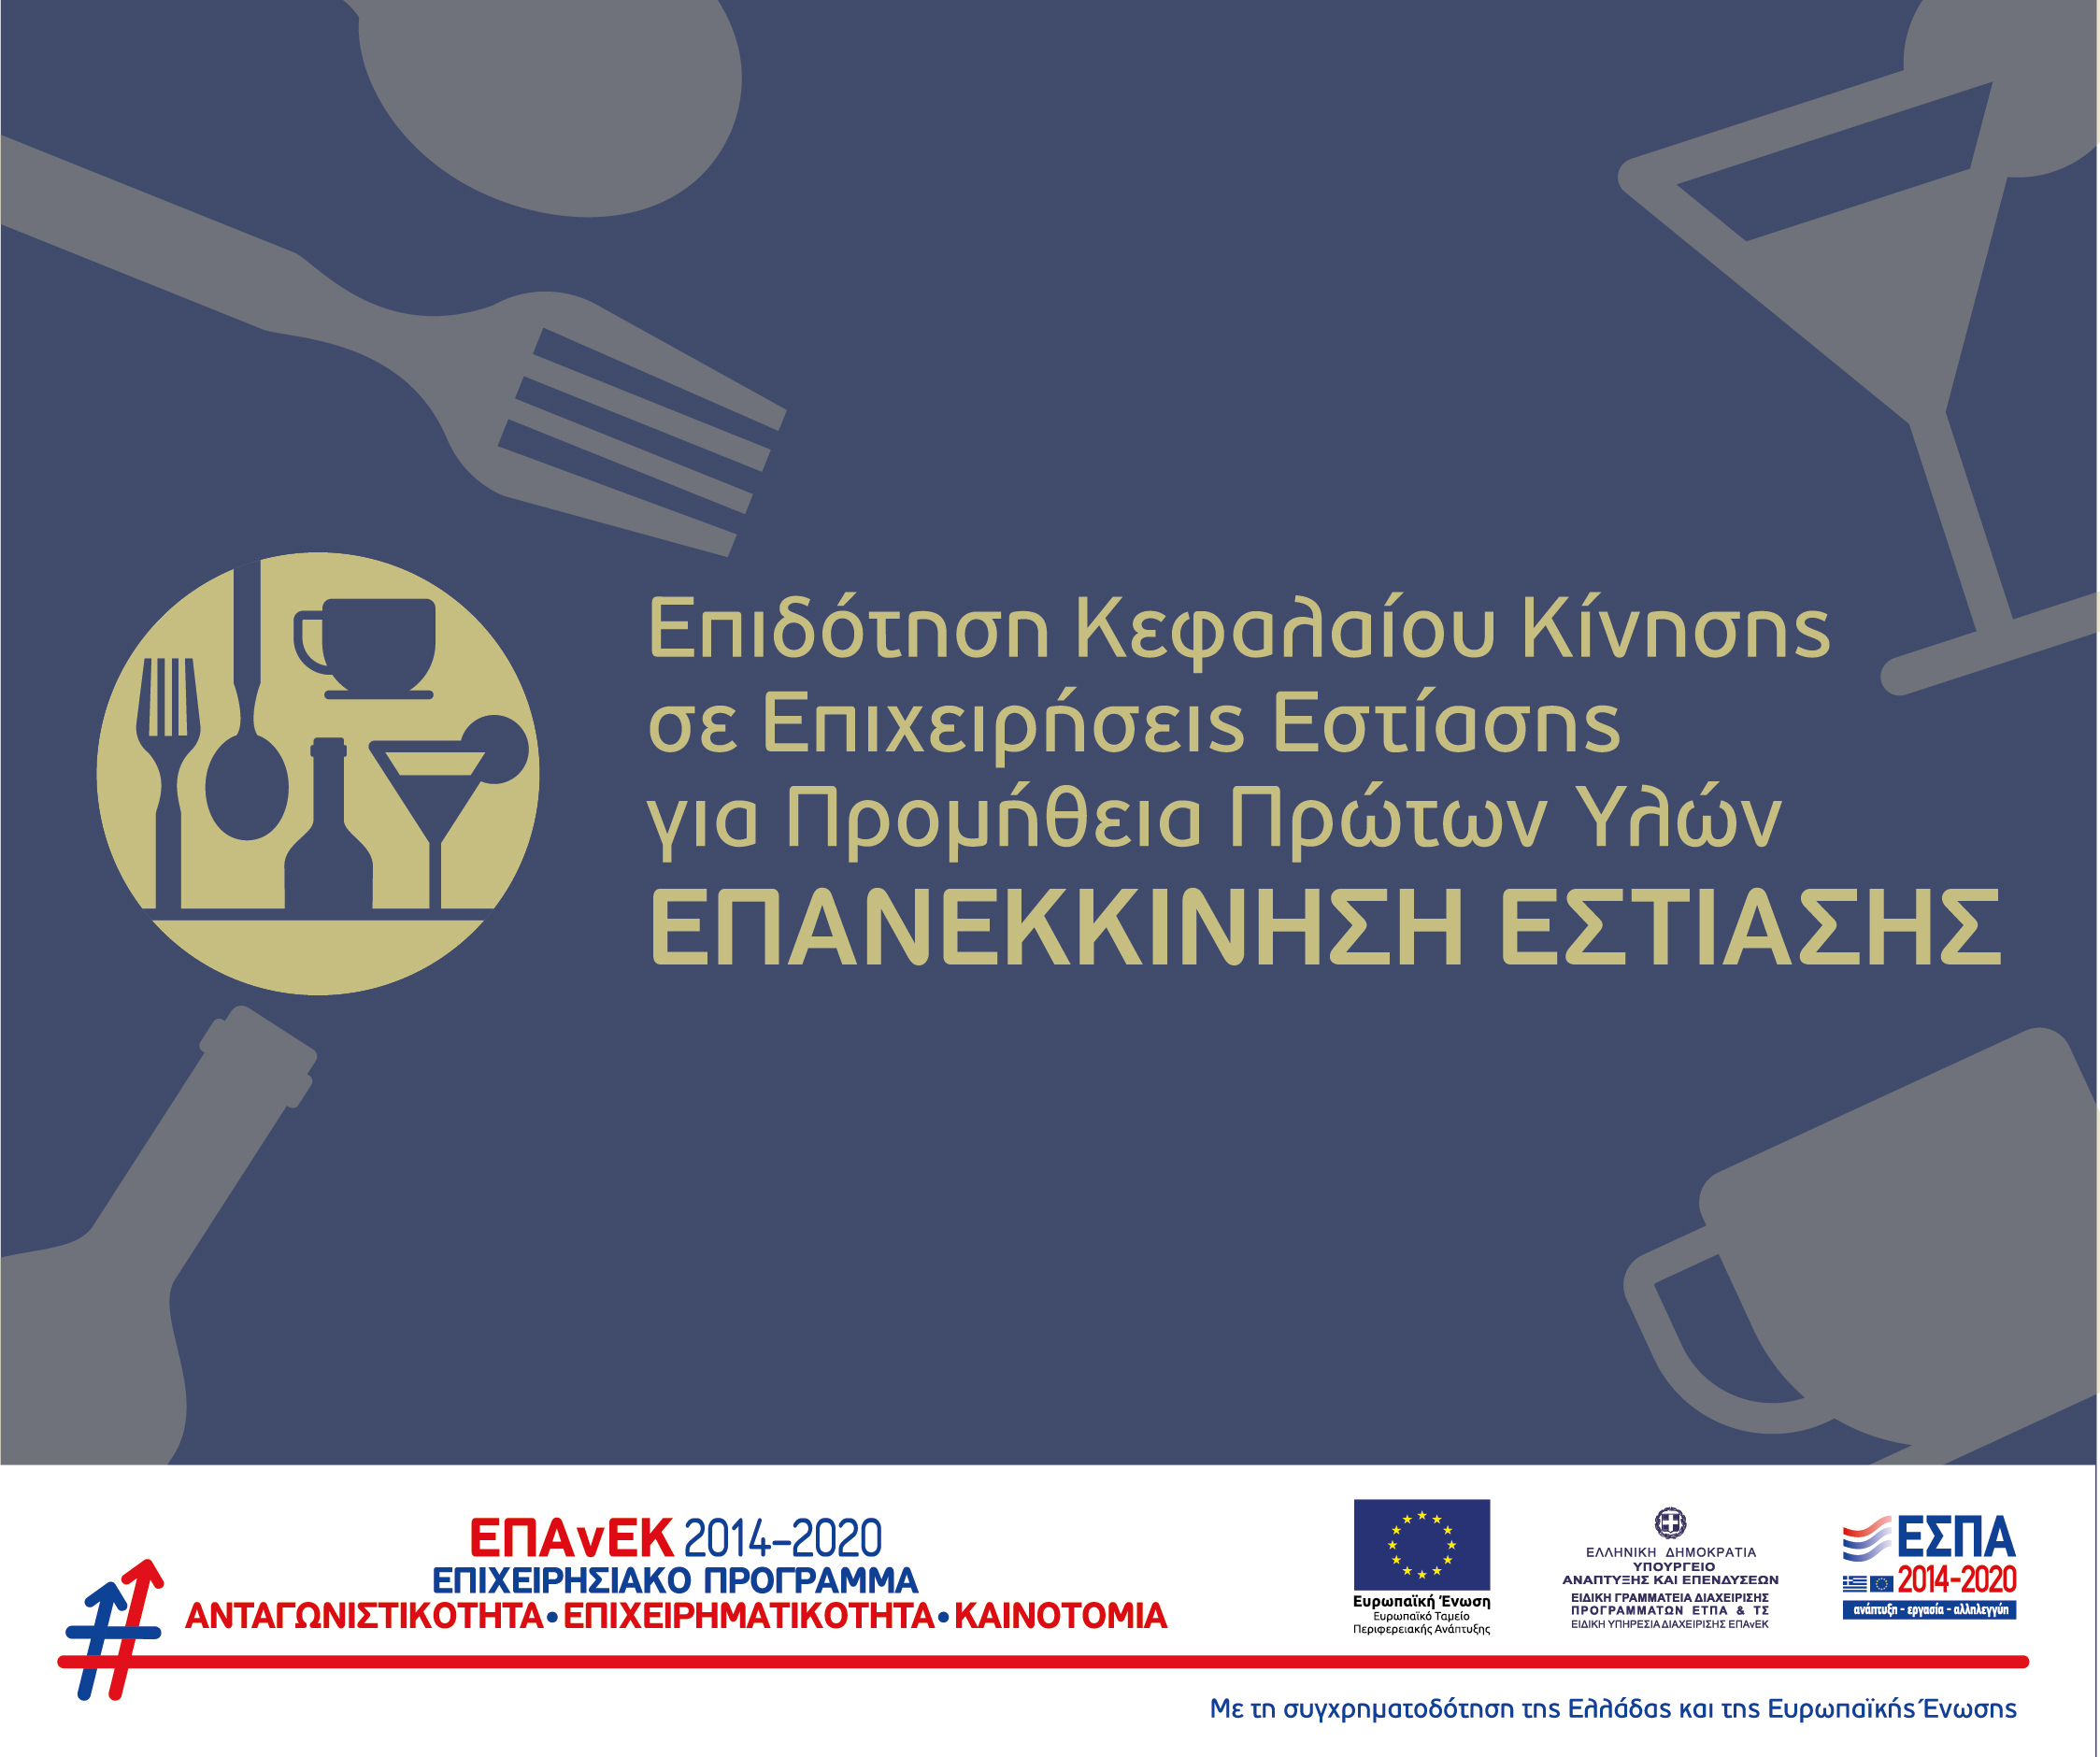 Working Capital Grant to Catering Companies - Vouzounerakis